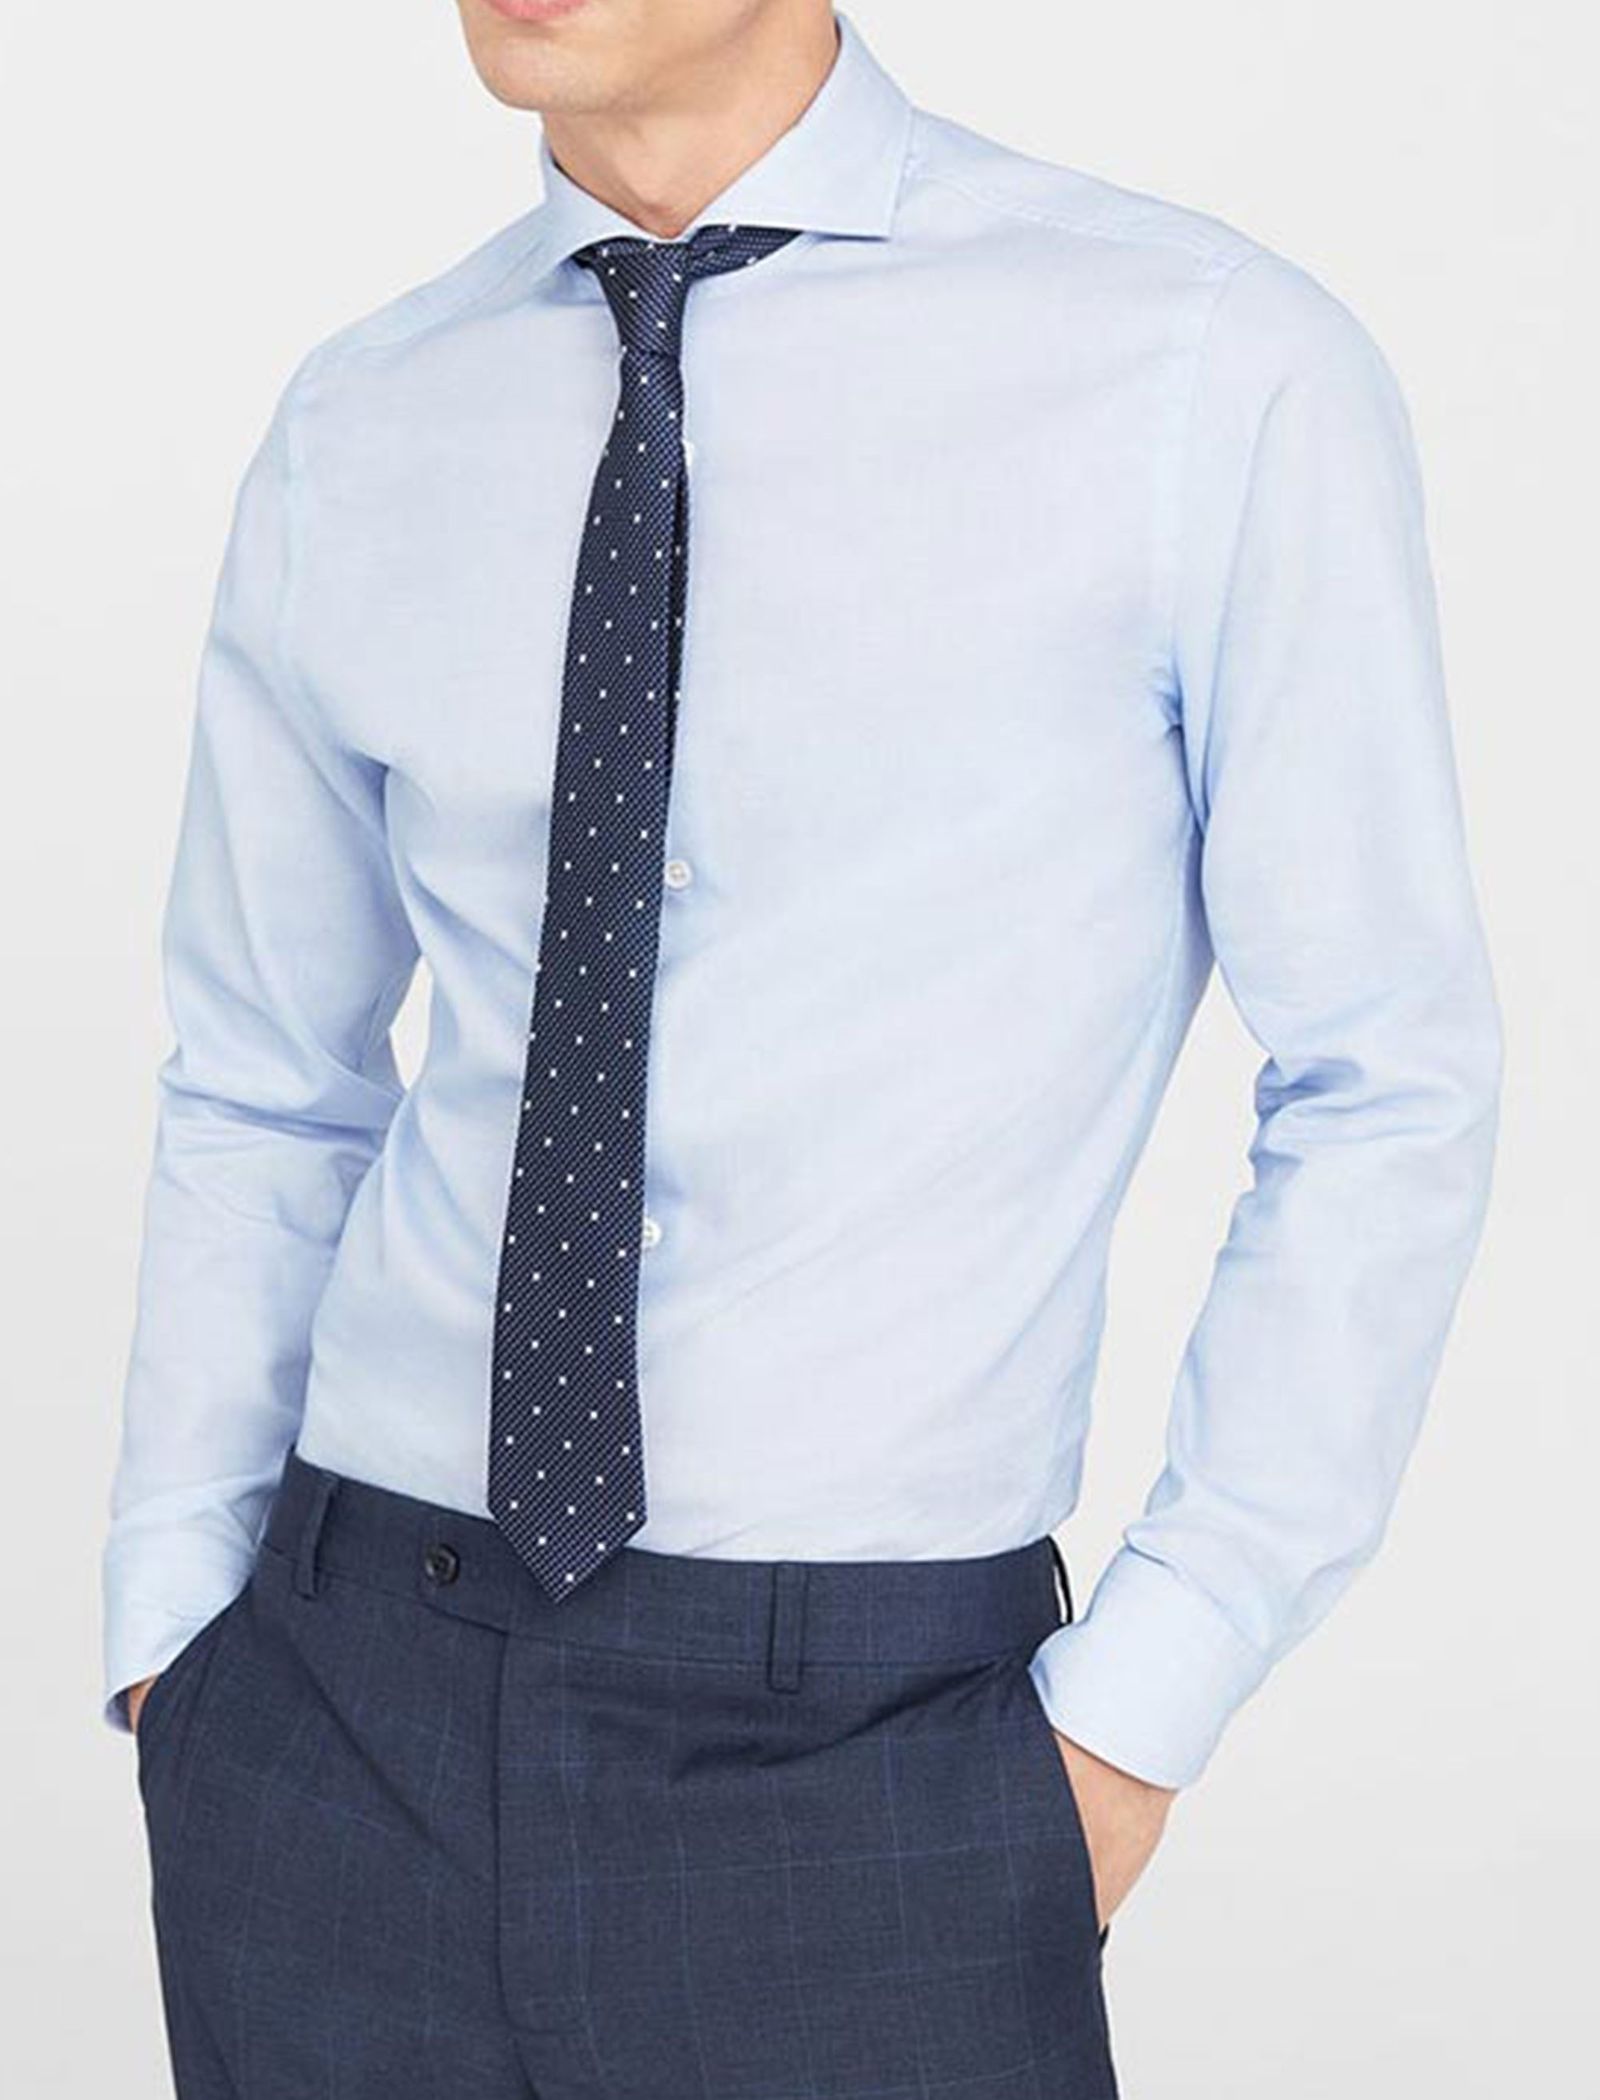 پیراهن رسمی مردانه - مانگو - آبي روشن - 1